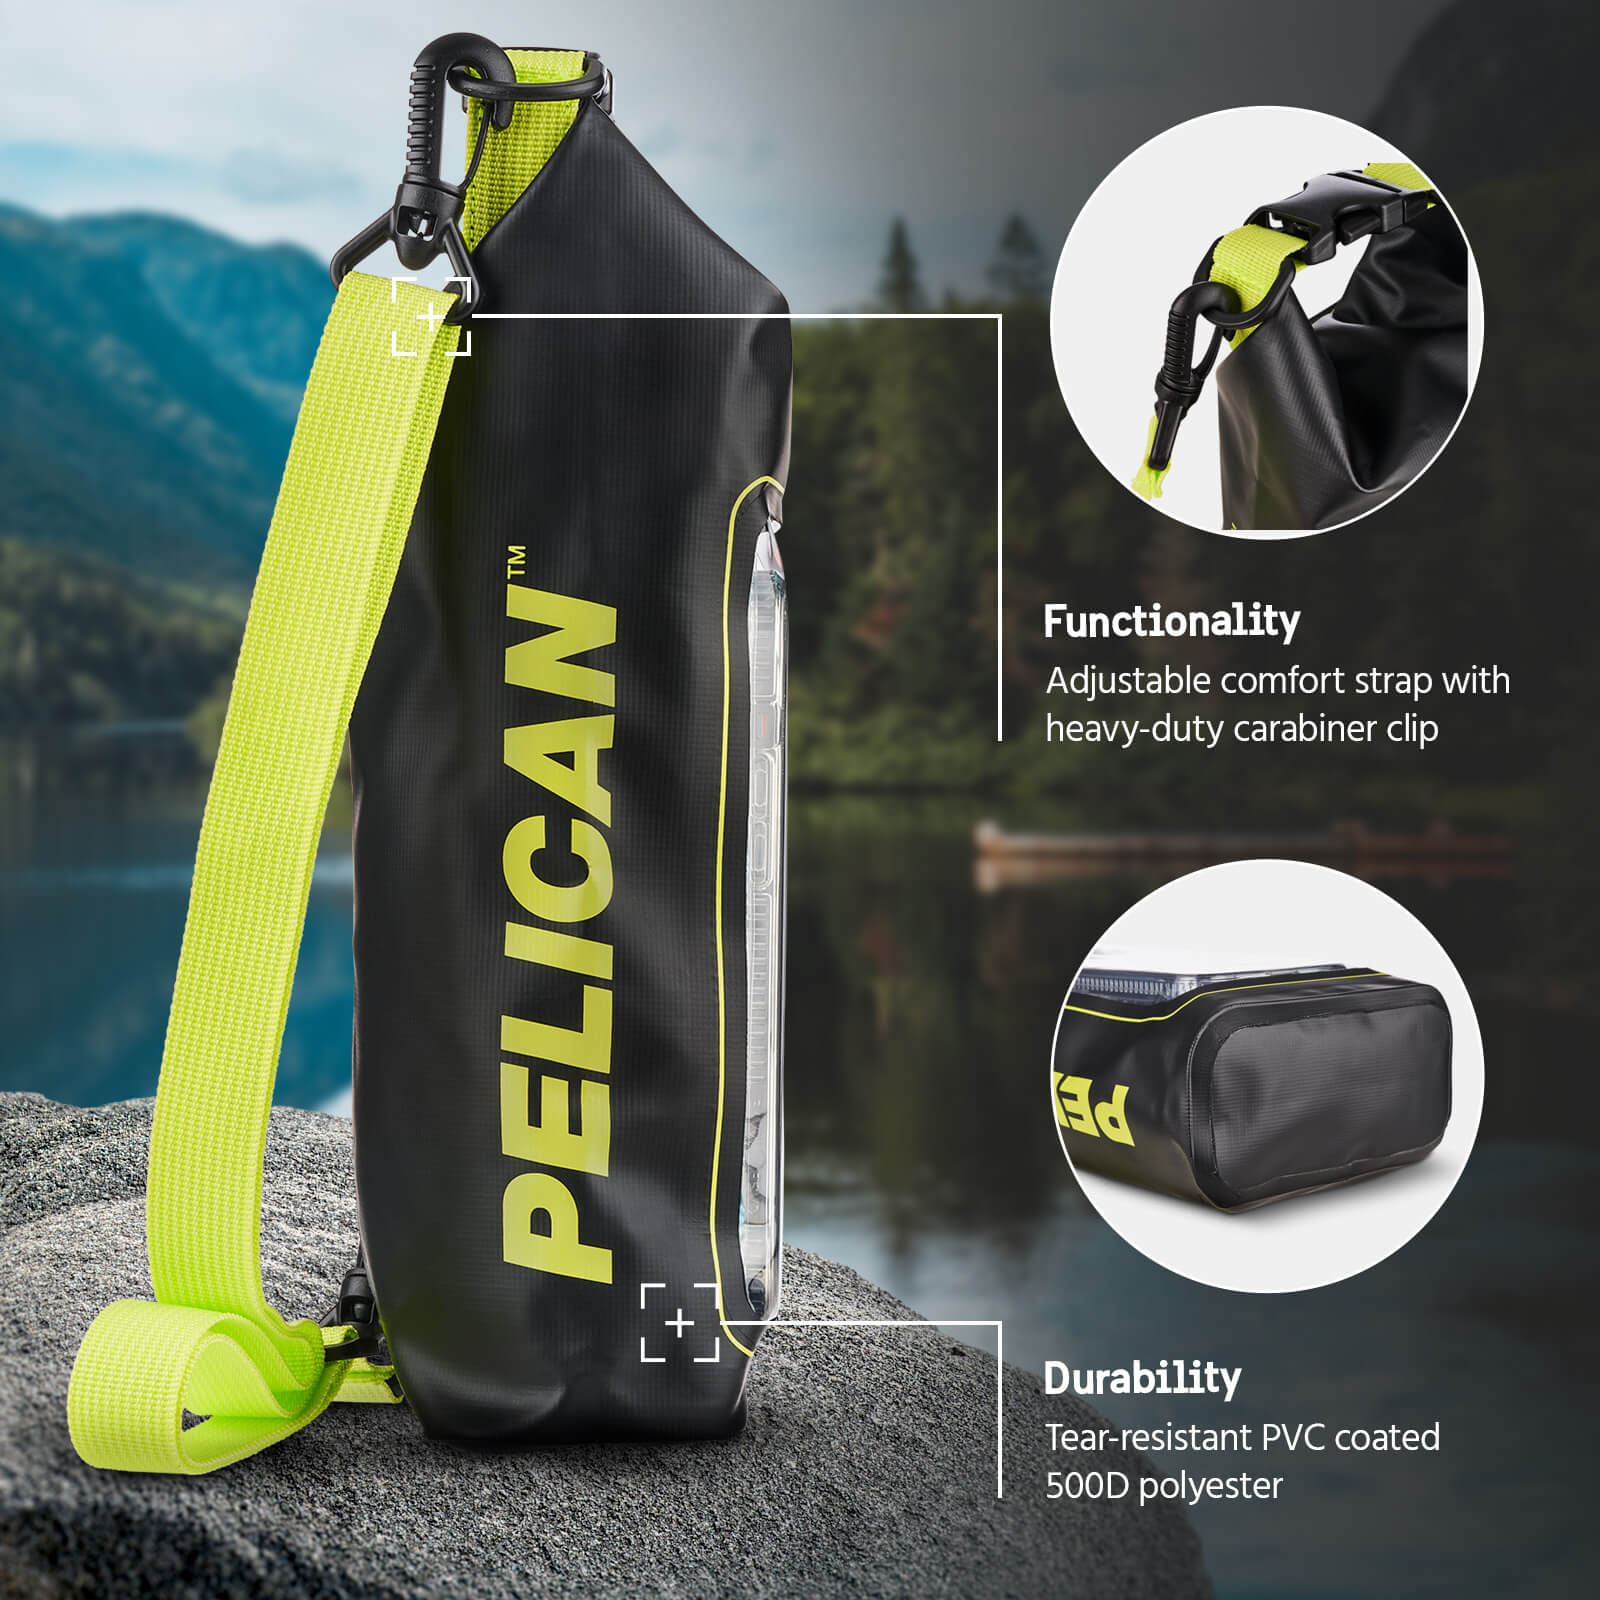 Pelican Marine Water Resistant Dry Bag - 2 Pack (Black/Hi Vis Yellow)